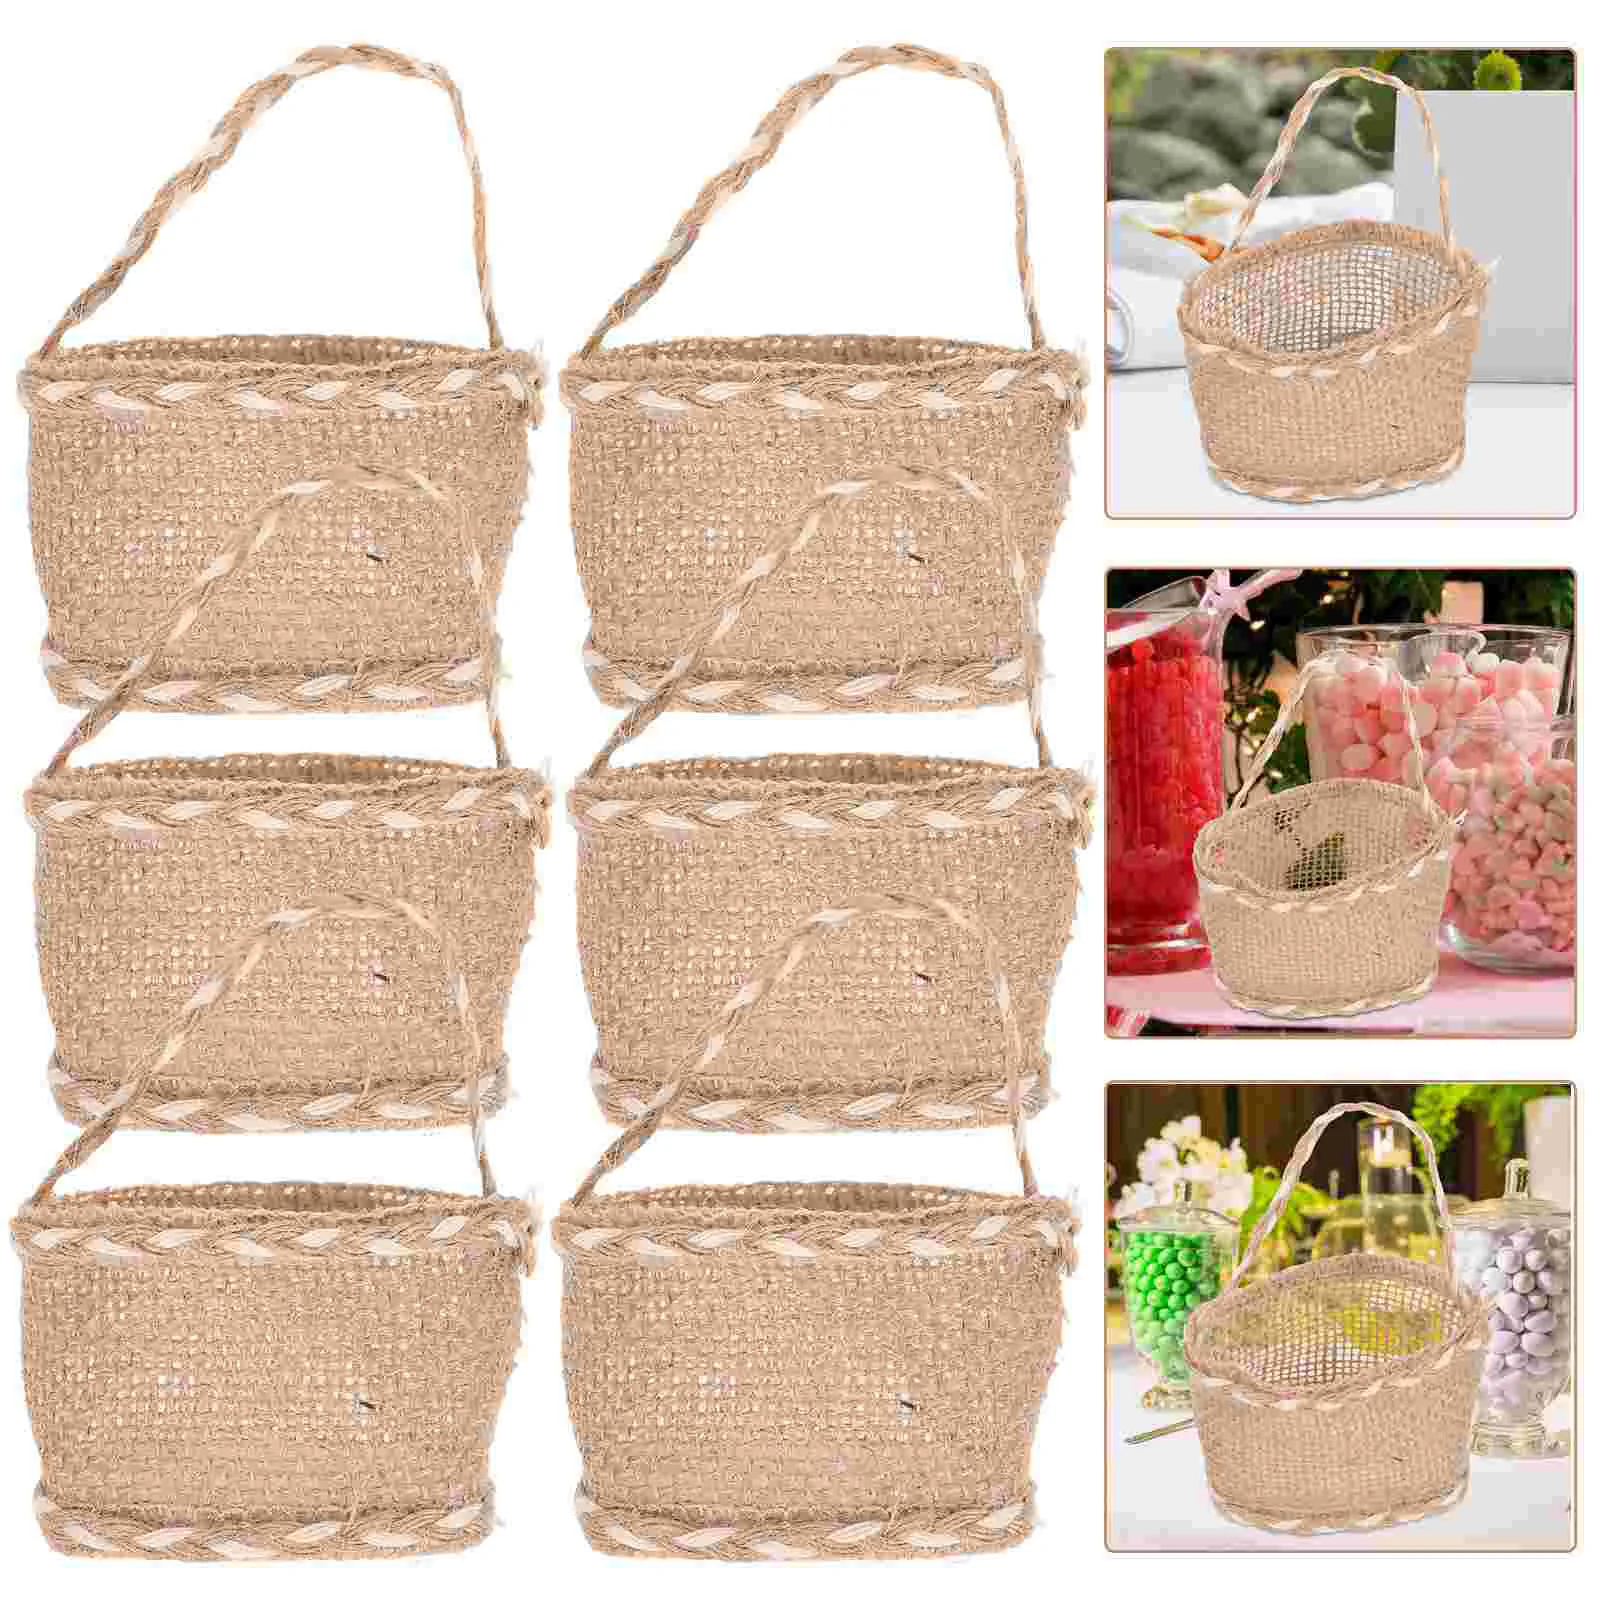 

6 Pcs Food Woven Basket Storage Candy Mini Baskets Favors Hand Picnic Manual Wedding Handle